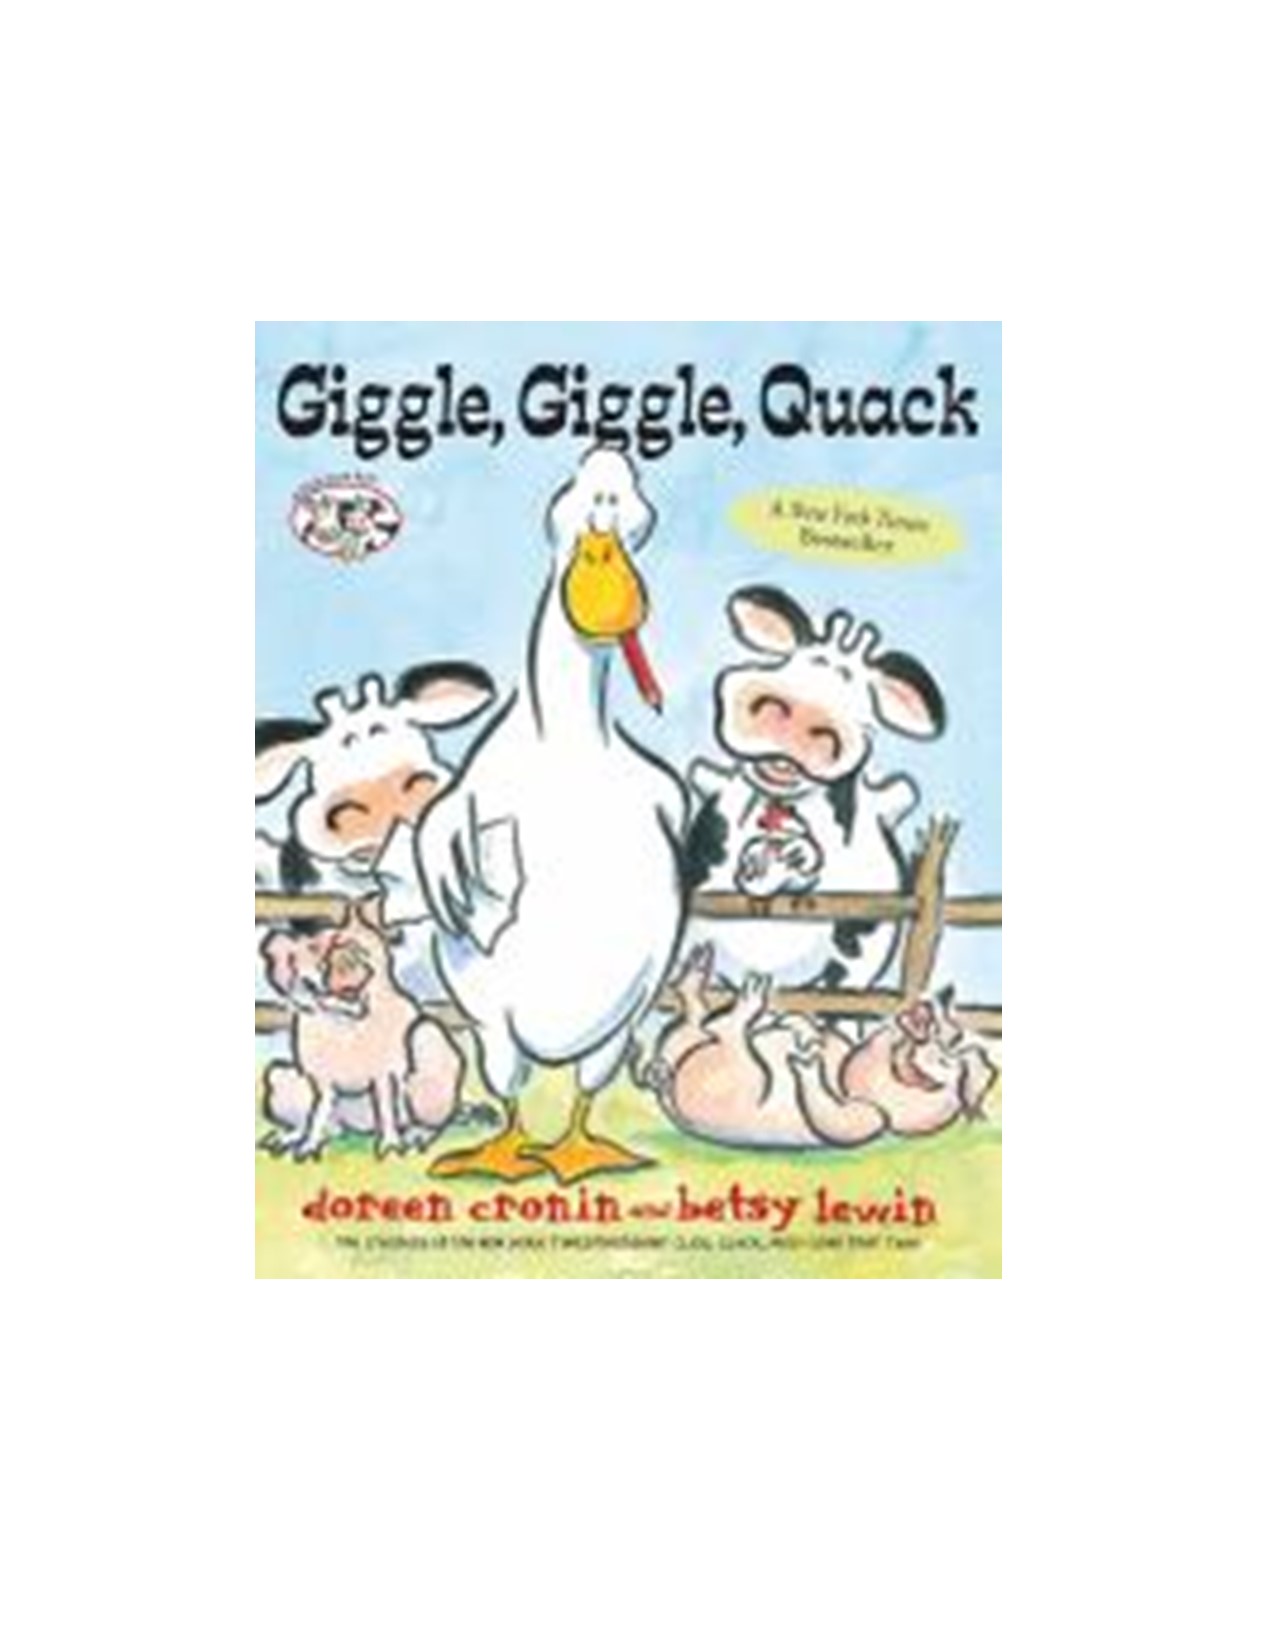 Giggle giggle quack cover